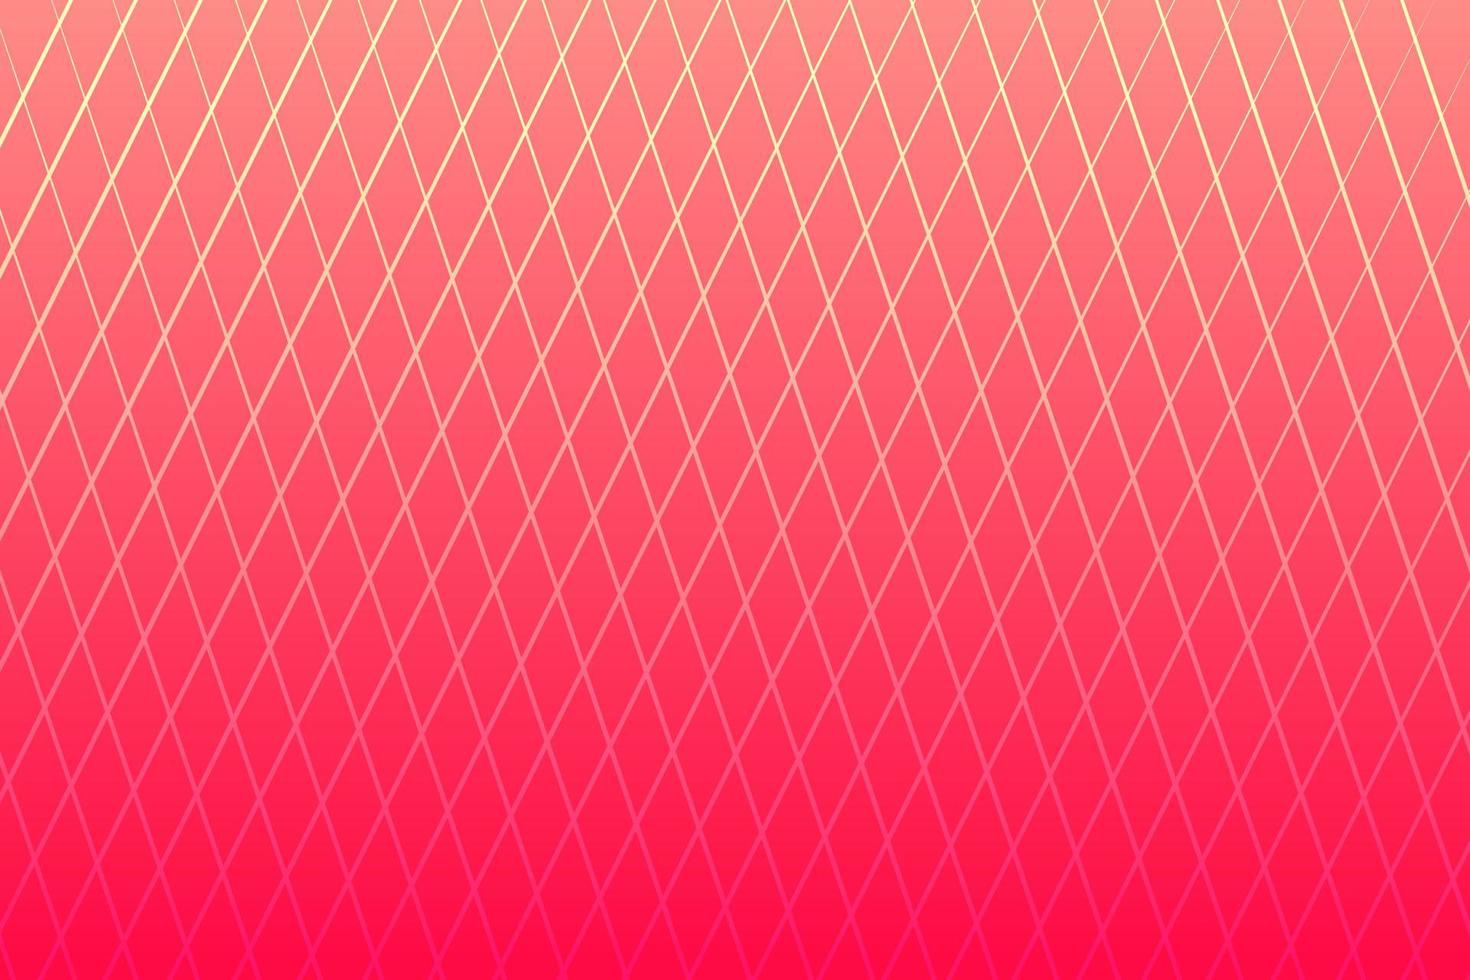 mönster med geometrisk element i rosa-guld toner. abstrakt lutning bakgrund vektor